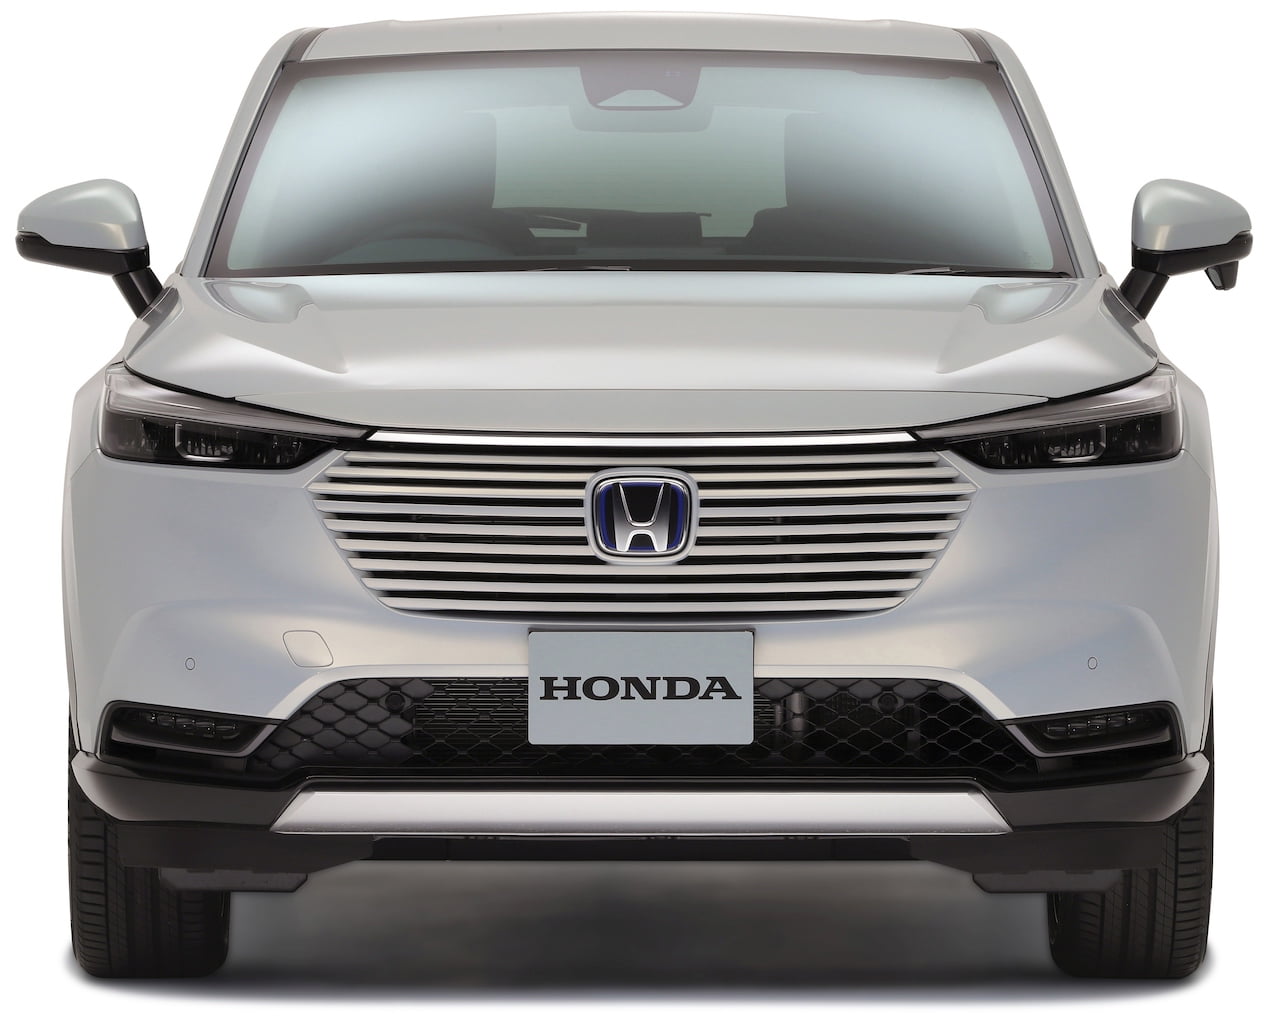 2022 Honda HRV for USA to use bigger platform & rugged styling